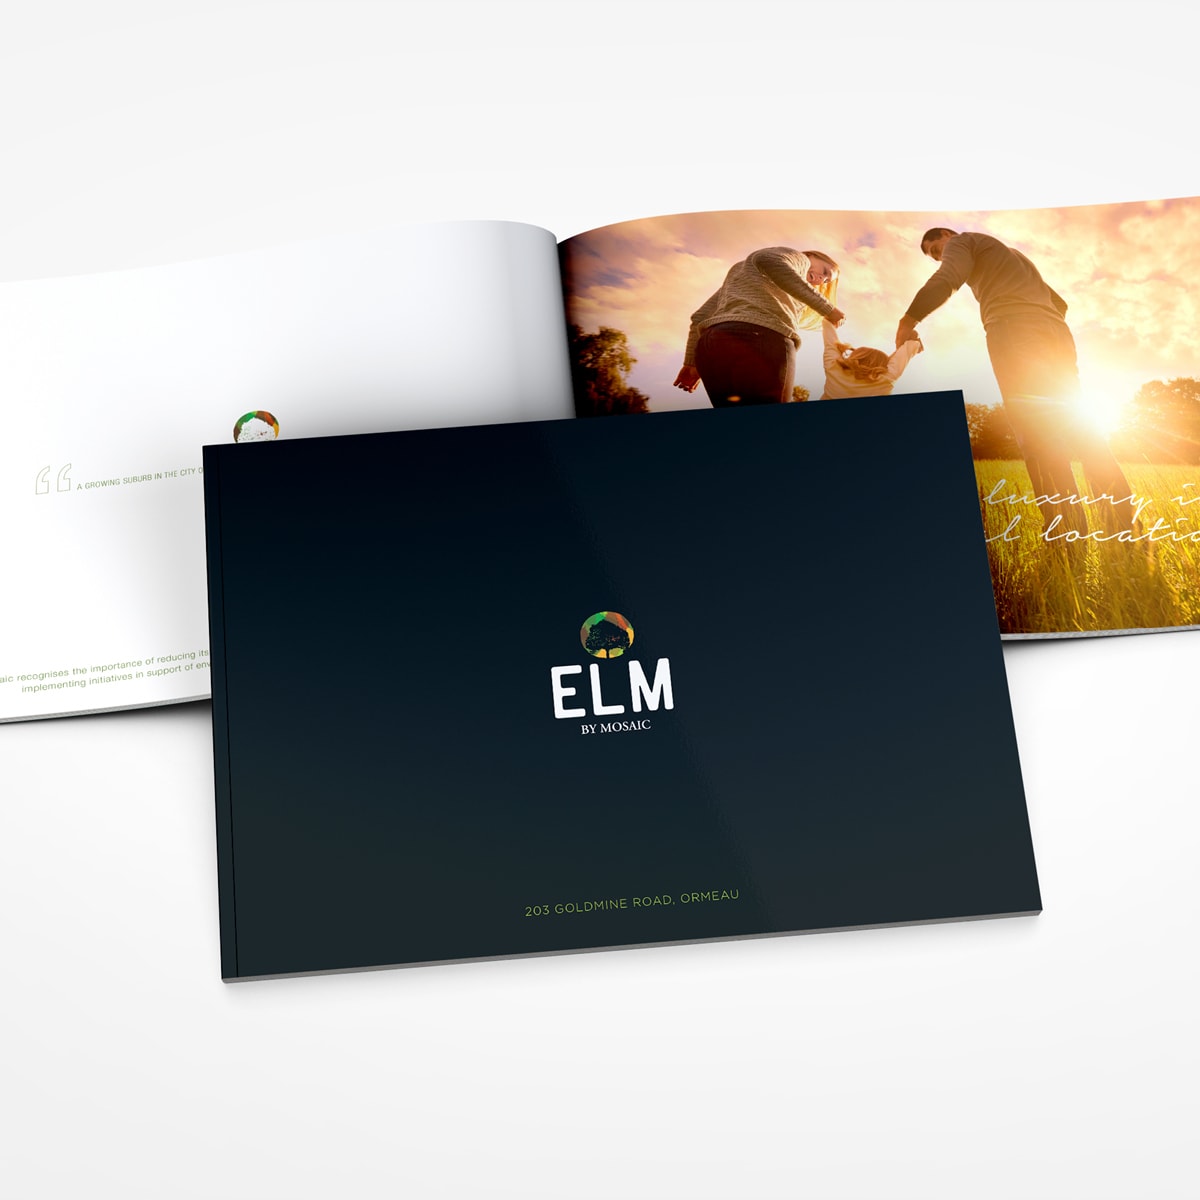 Elm by Mosaic Logo